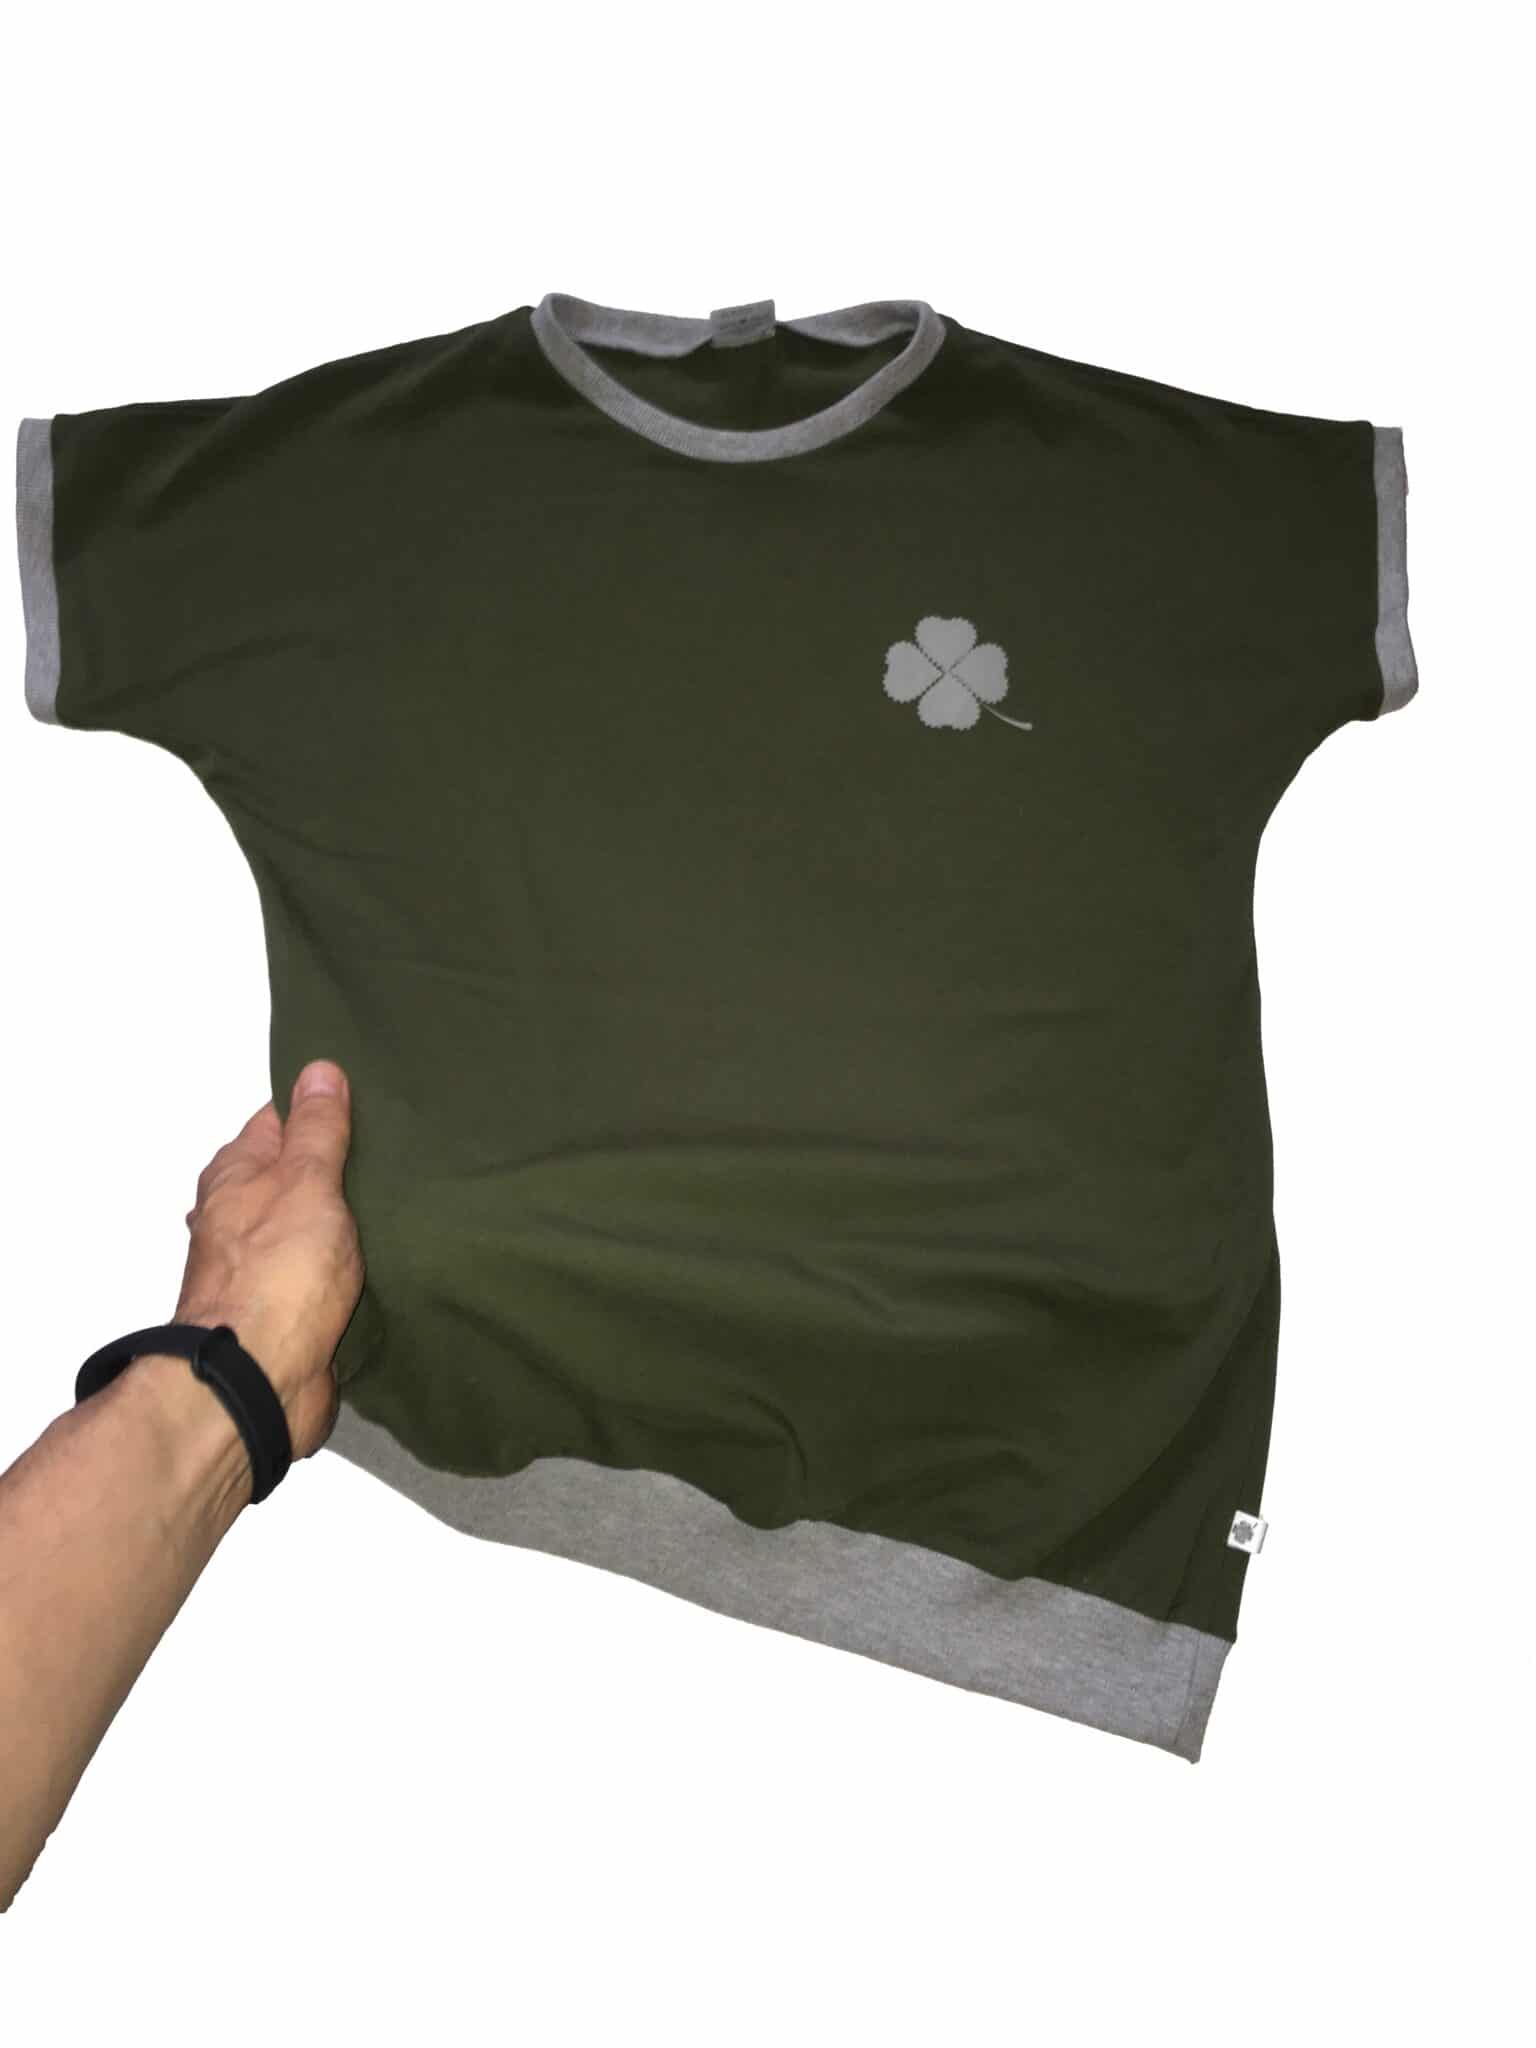 Spitzenjunge T-Shirt Kleeblatt (Khaki) – Test & Erfahrung